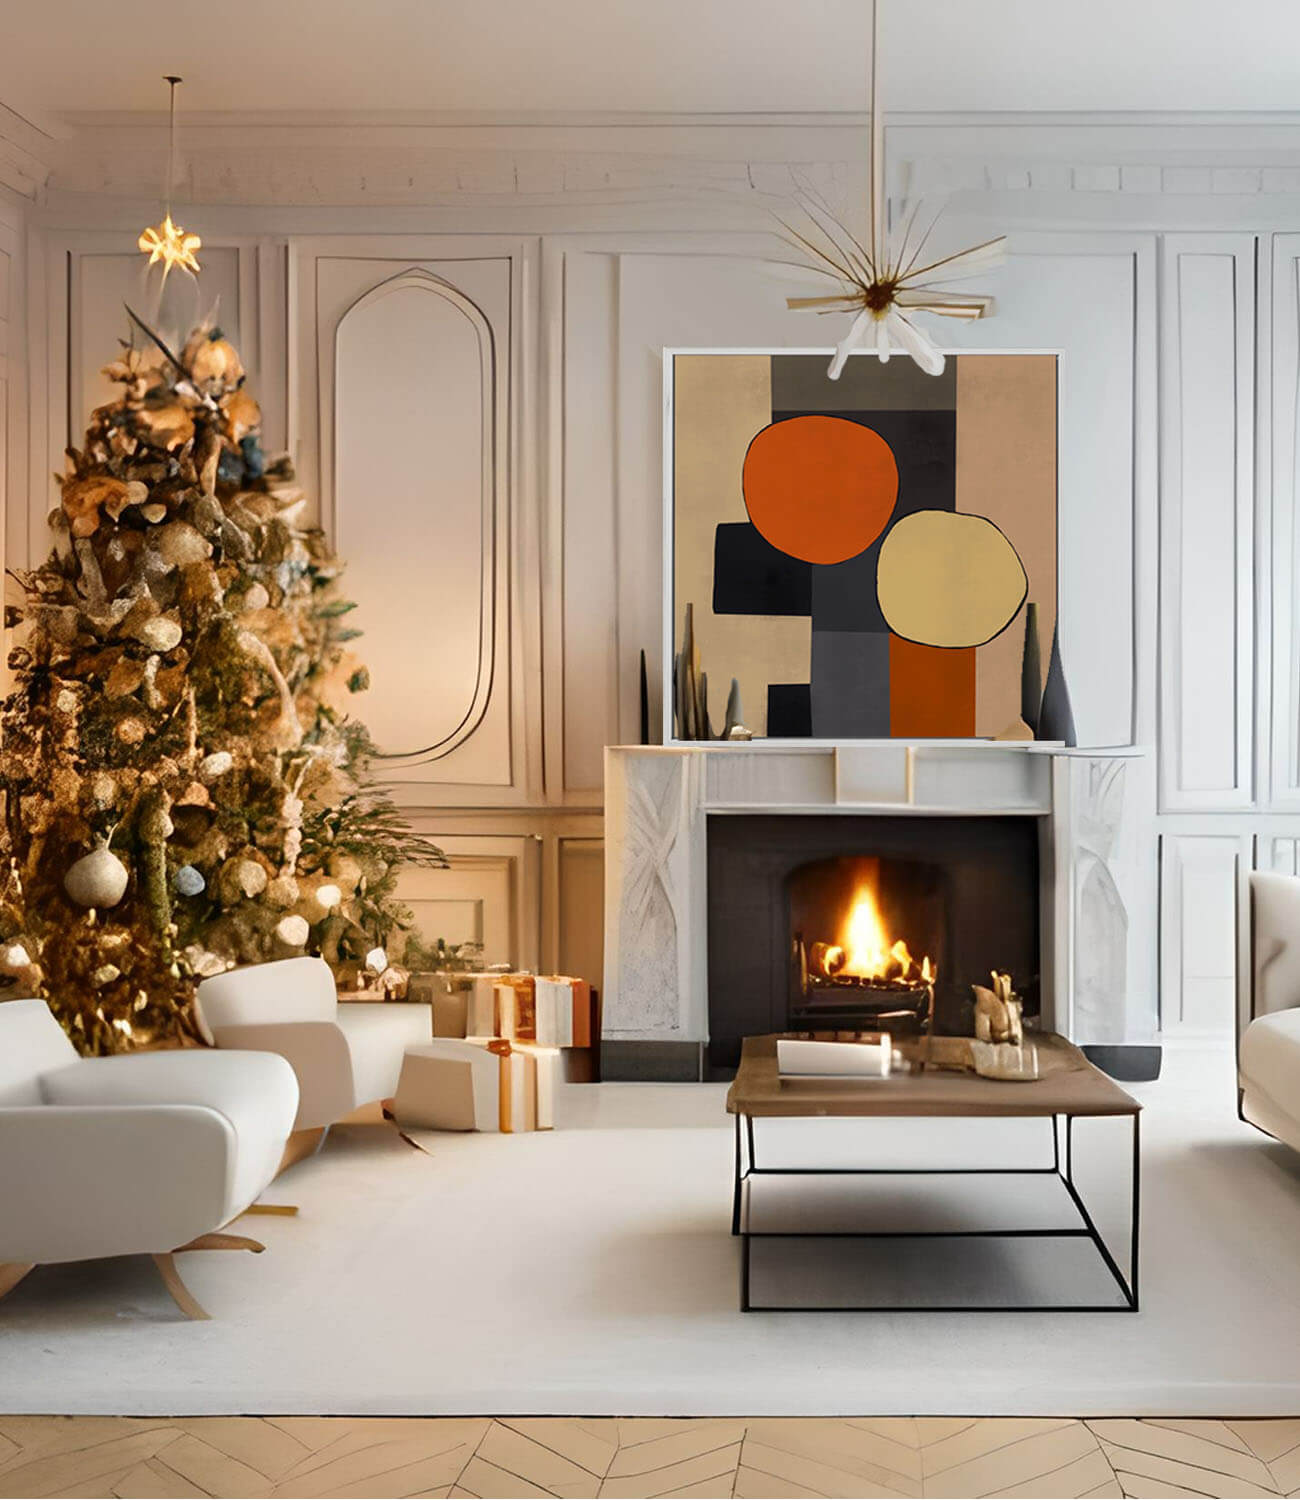 Abstract House Christmas Living room decor Christmas tree and art above fireplace